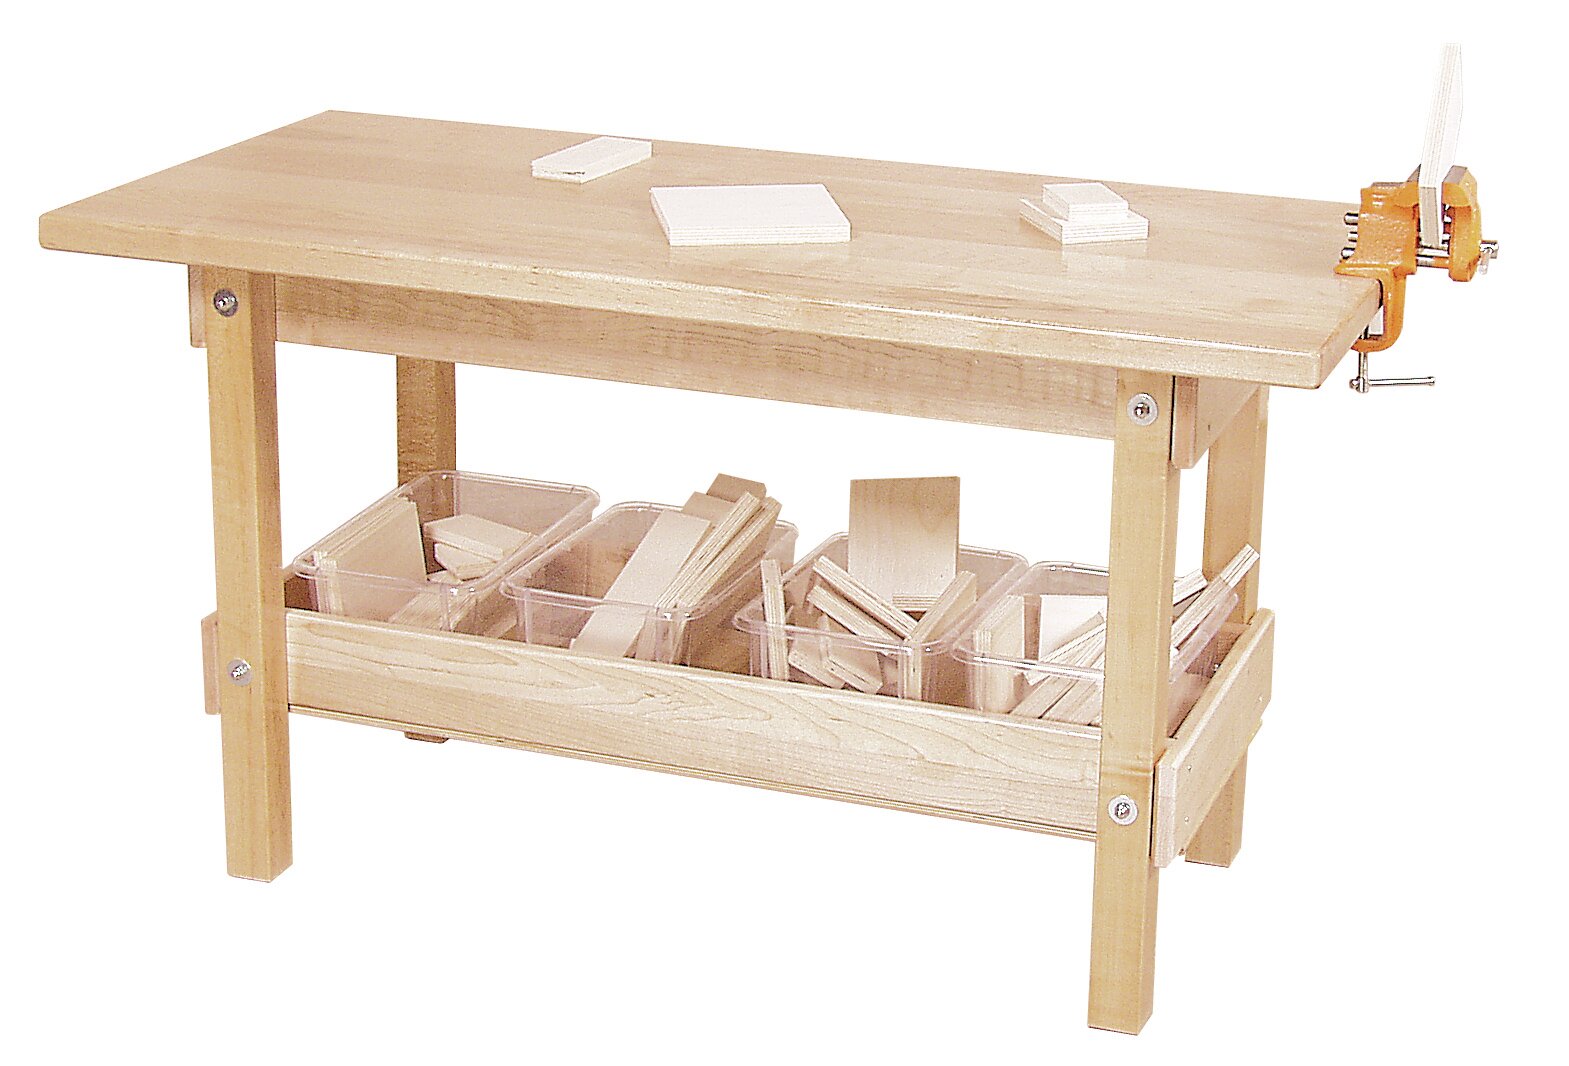 Wood Designs Workbench With Tray | eBay